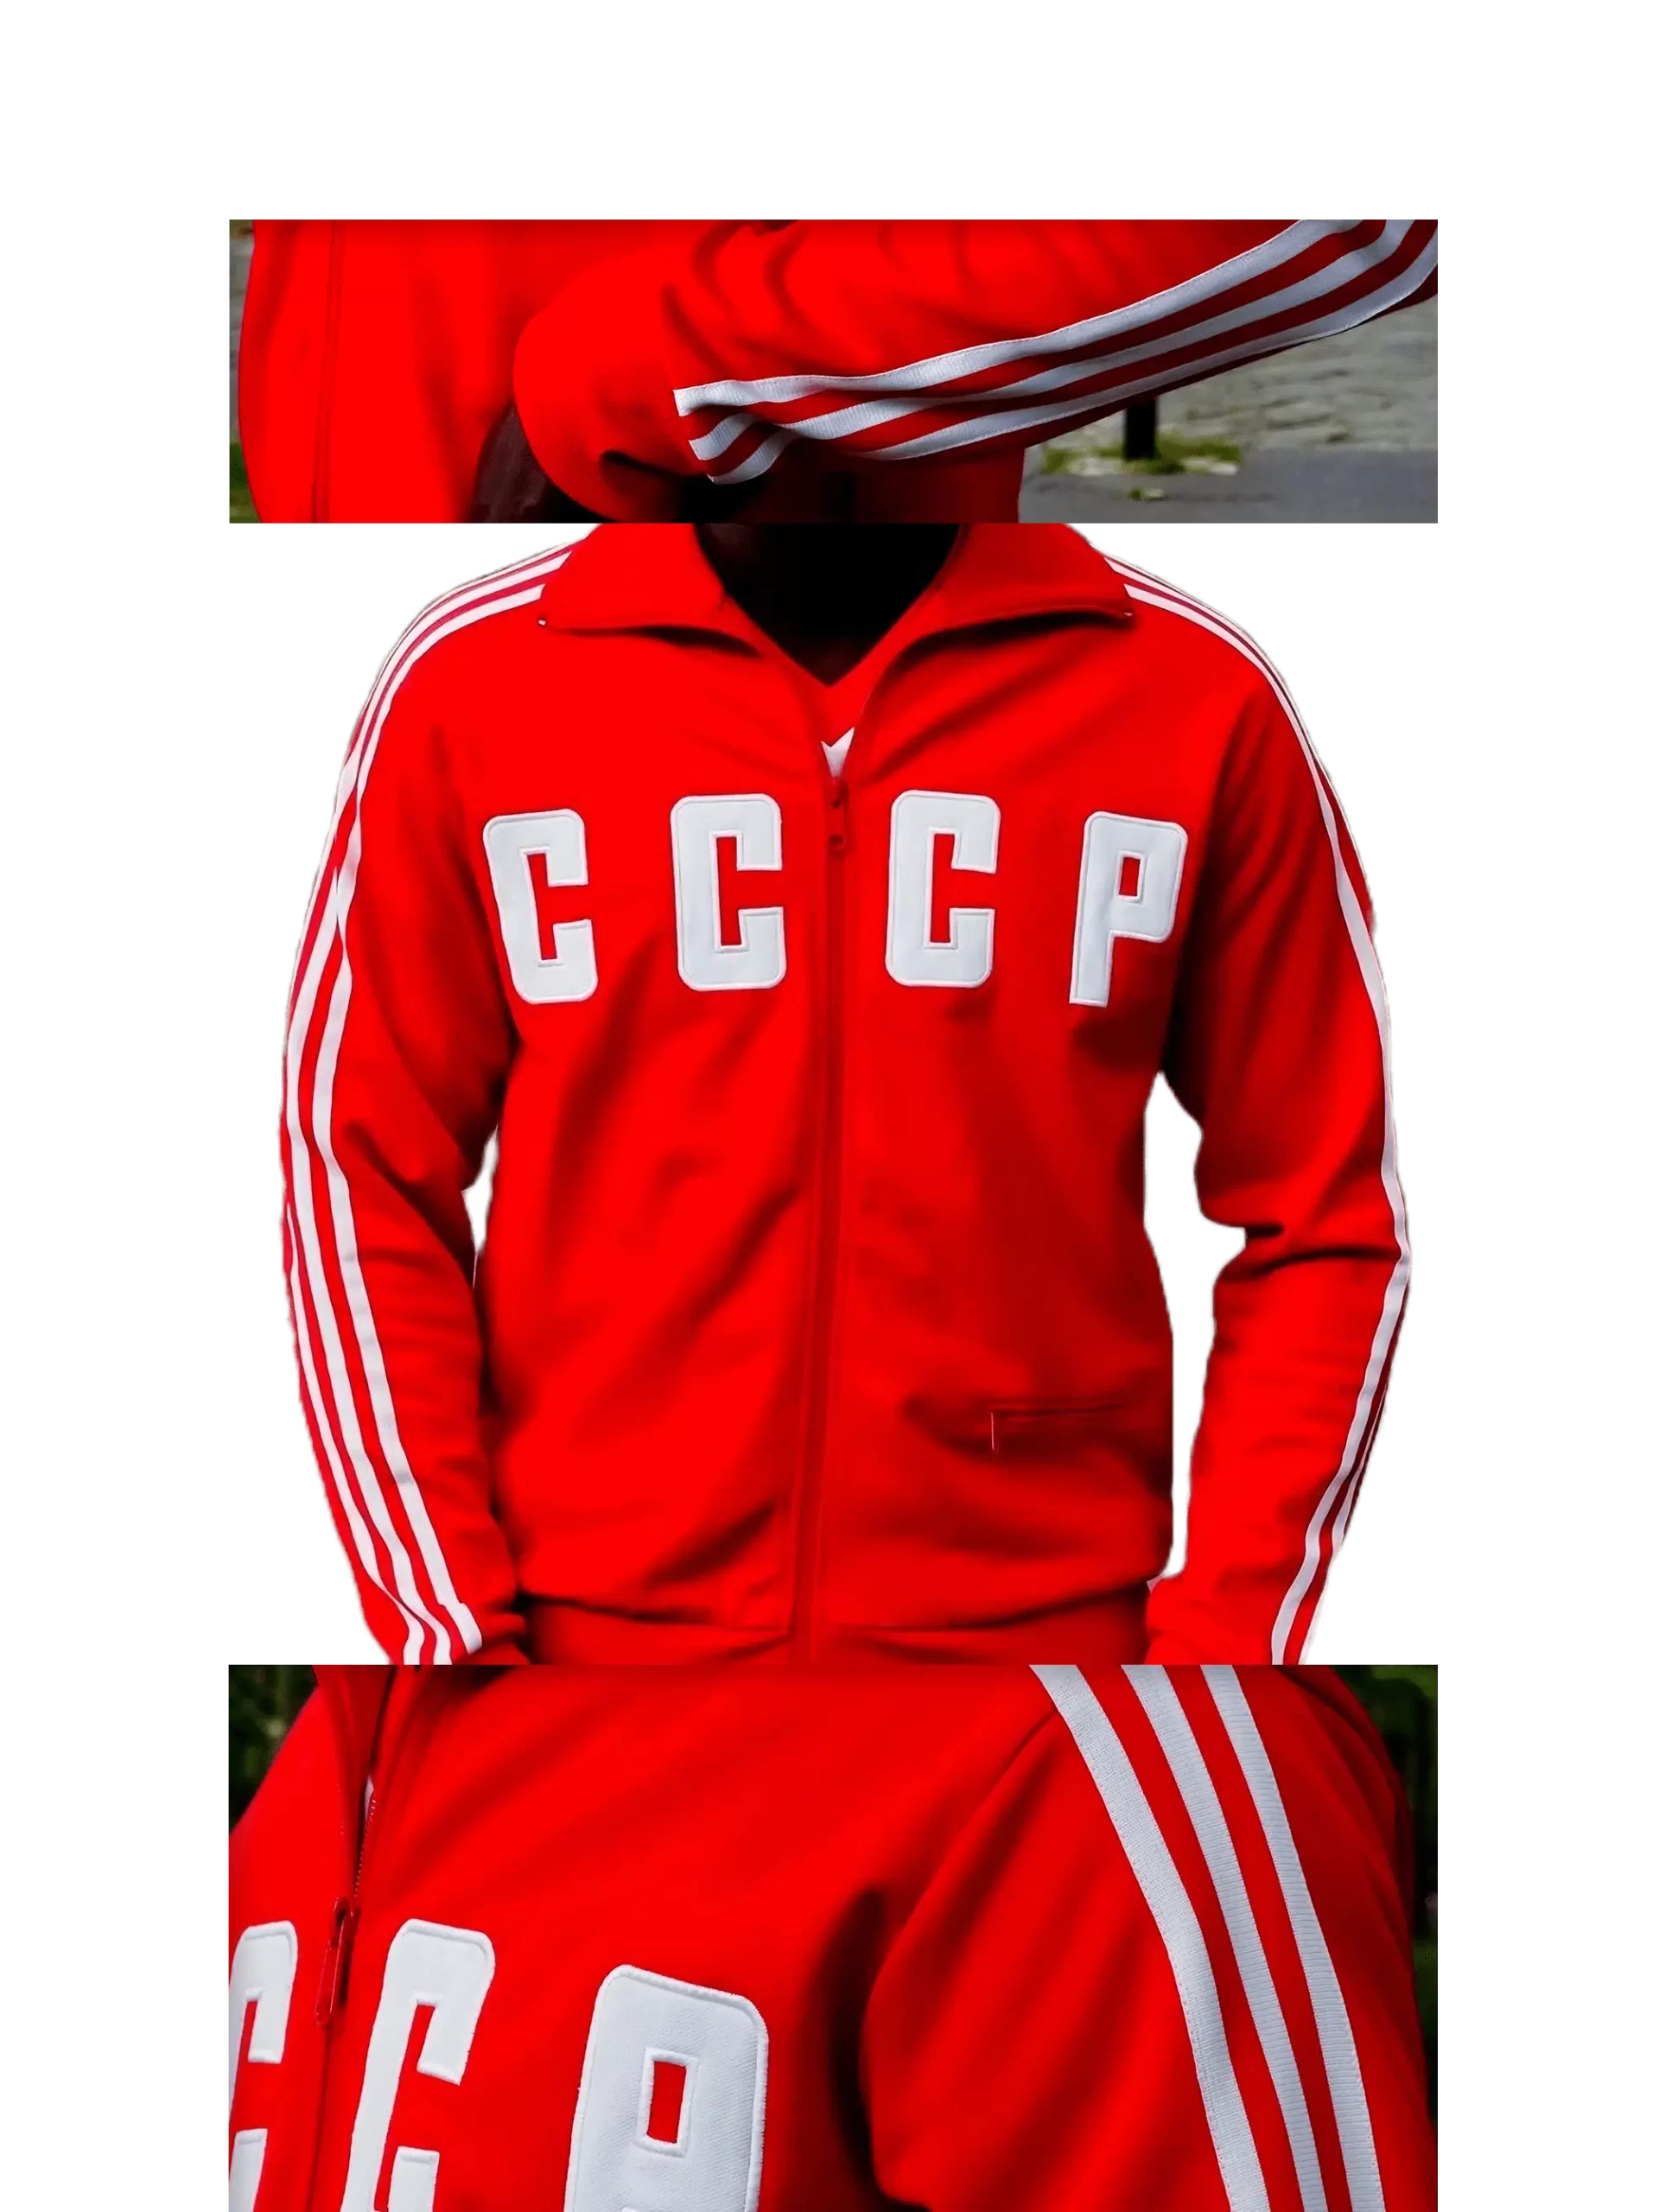 Men's 2002 Soviet CCCP '82 TT by Adidas Originals: Epic (EnLawded.com file #lmchk58011ip2y123314kg9st)